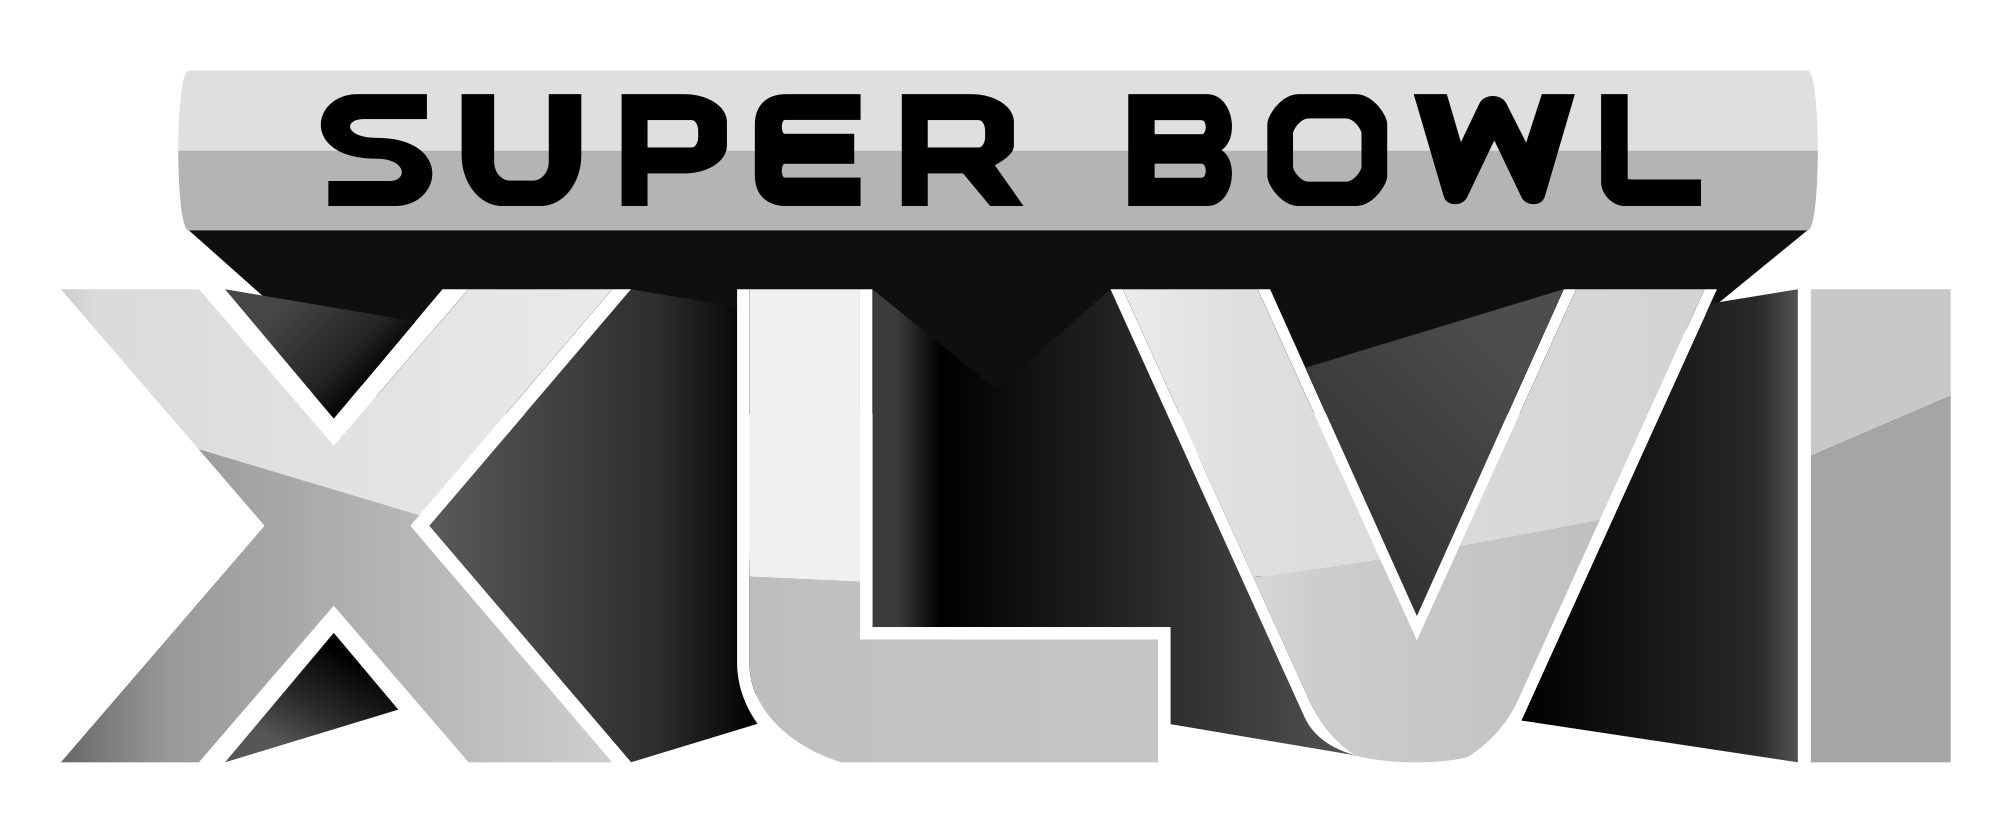 Super Bowl Logo PNG - 103581